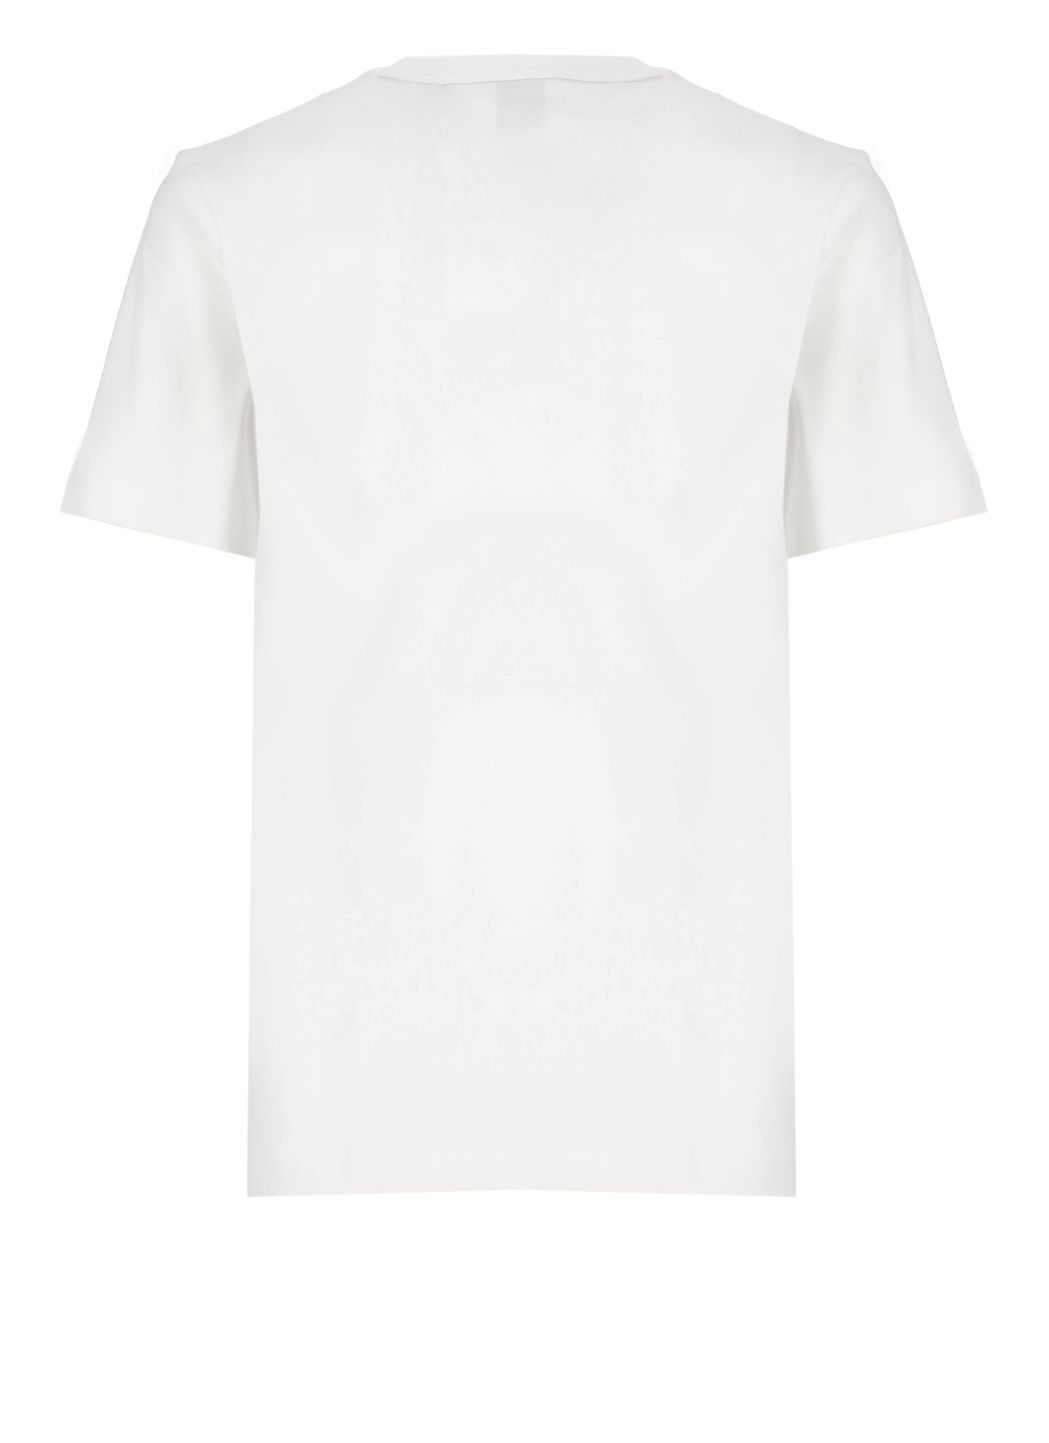 Tiburt 427 t-shirt